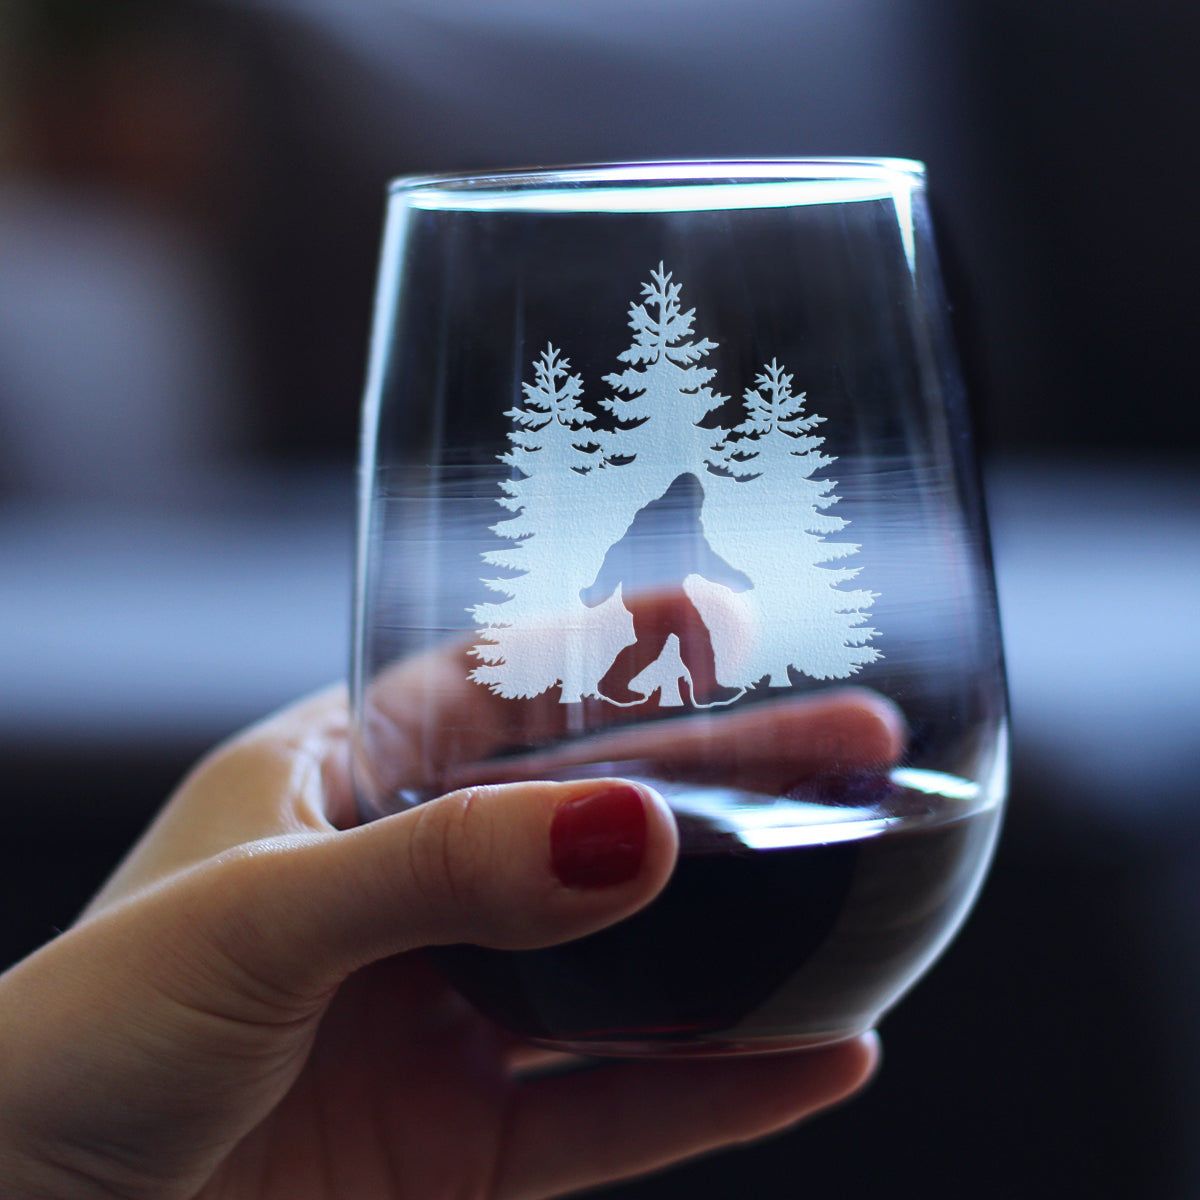 Bigfoot Engraved Stemless Wine Glass, Unique Sasquatch Themed